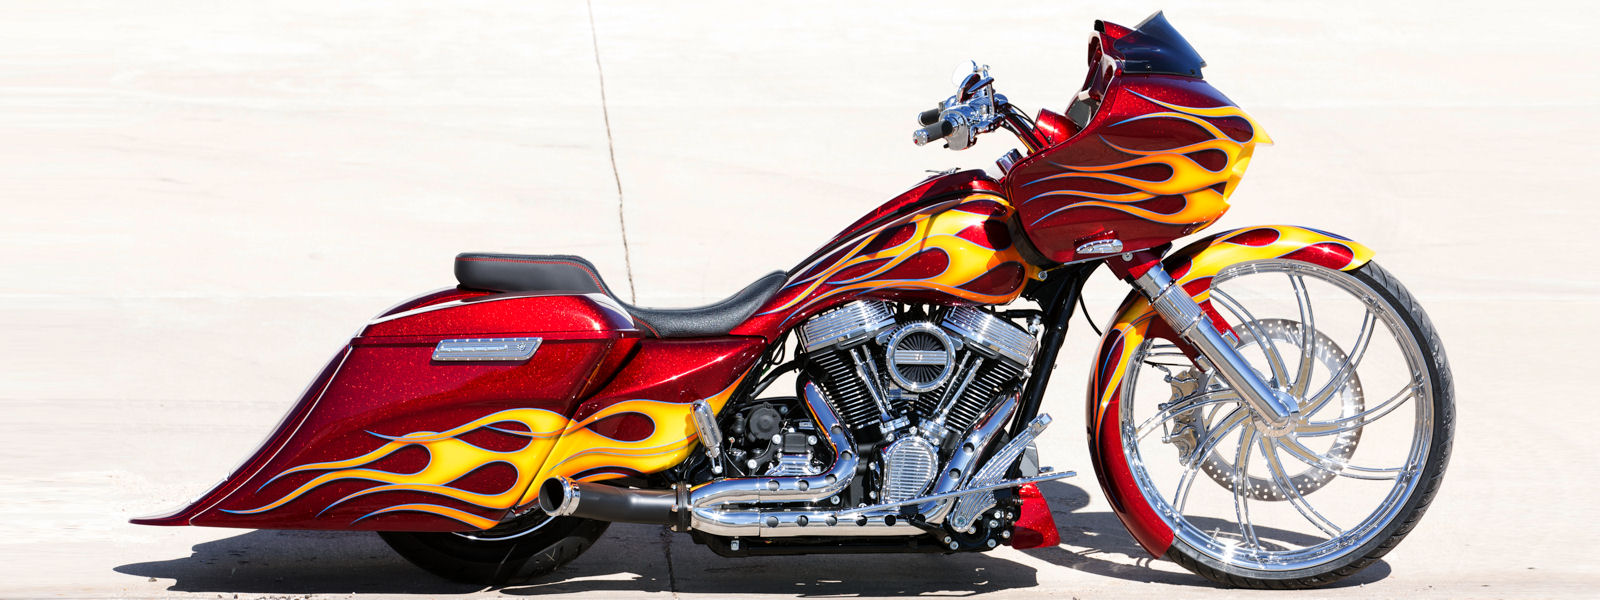 42+ Amazing Custom motorcycles companies image HD